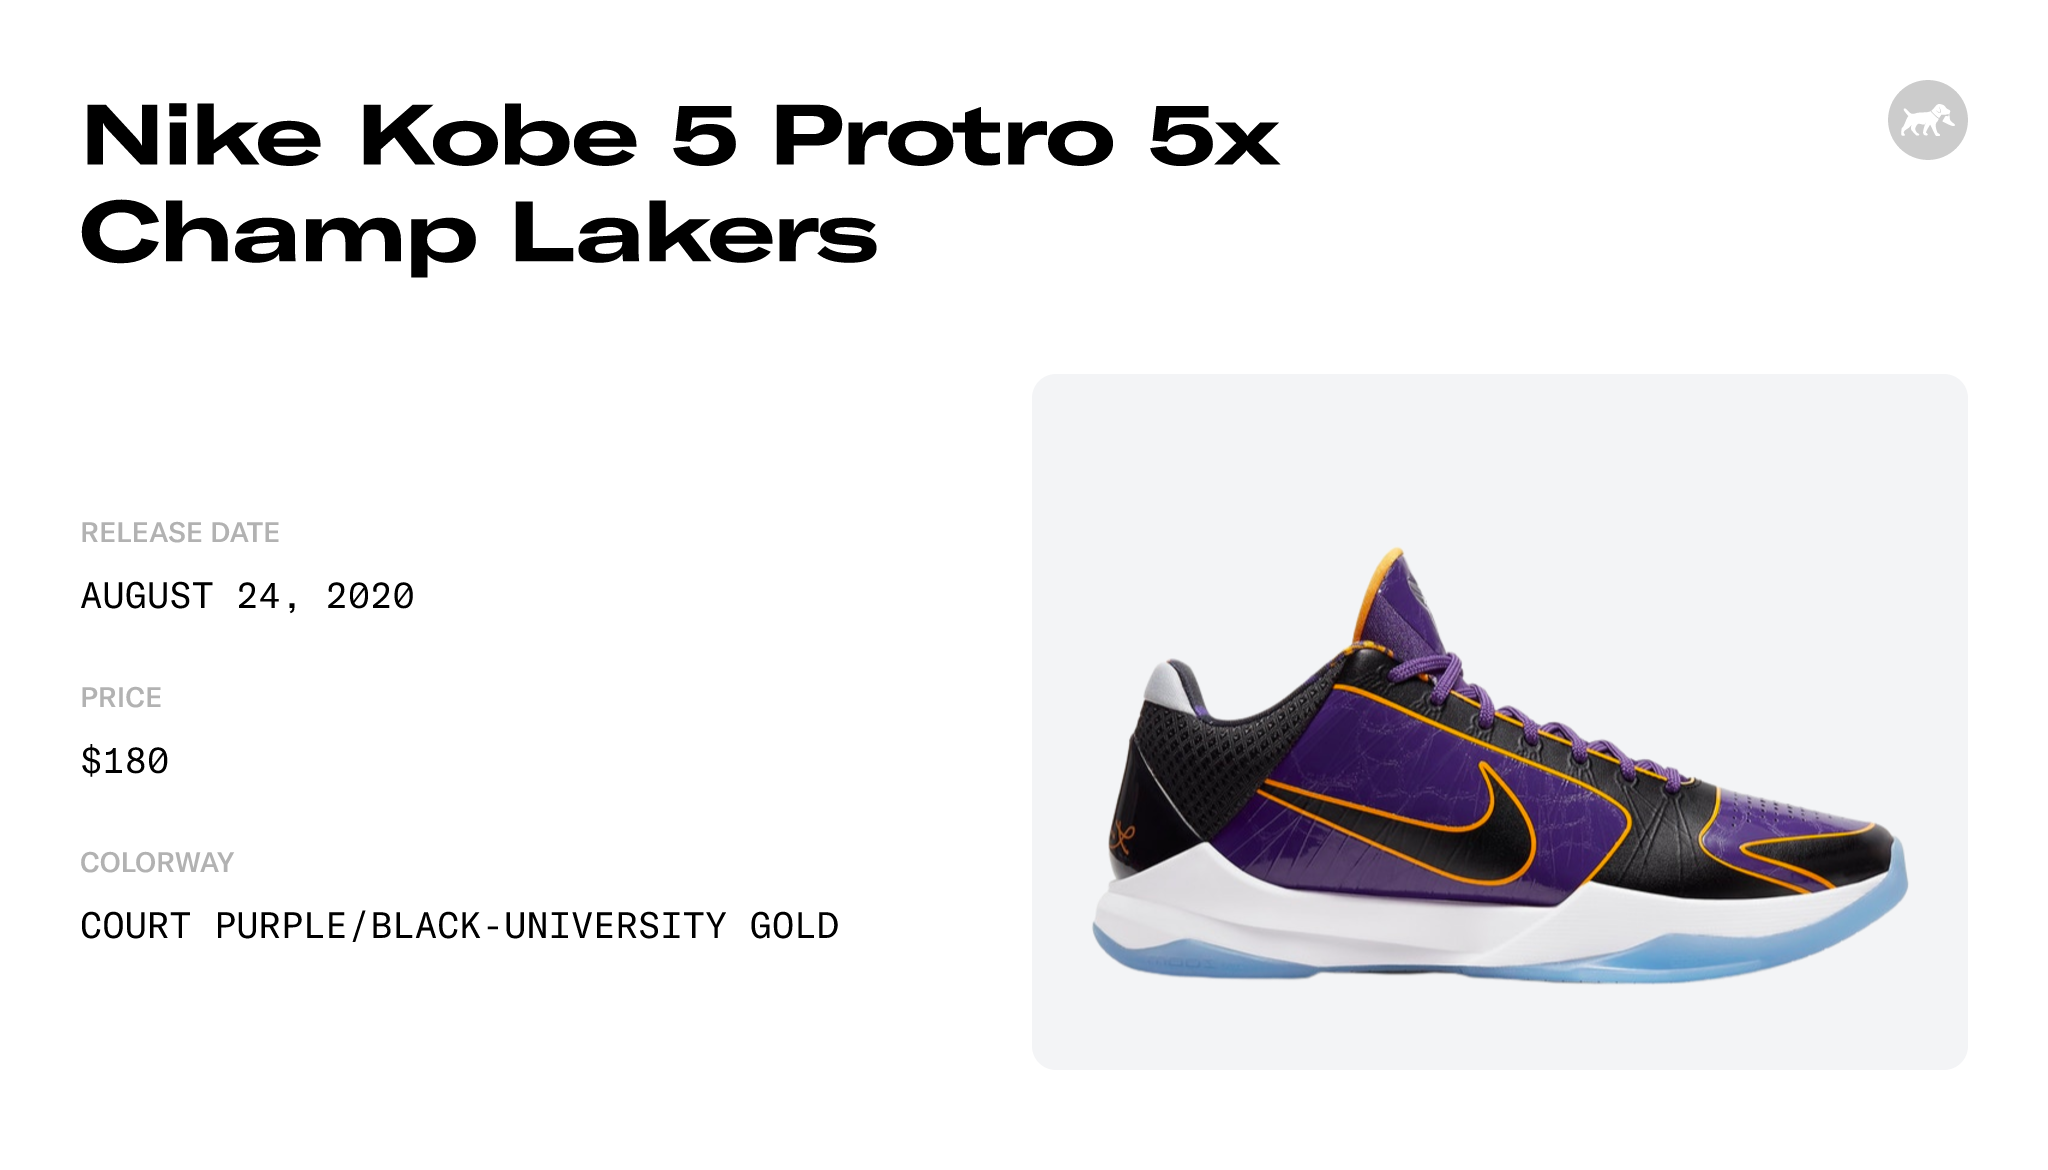 Nike Kobe 5 Protro 5x Champ Lakers - CD4991-500 Raffles and Release Date